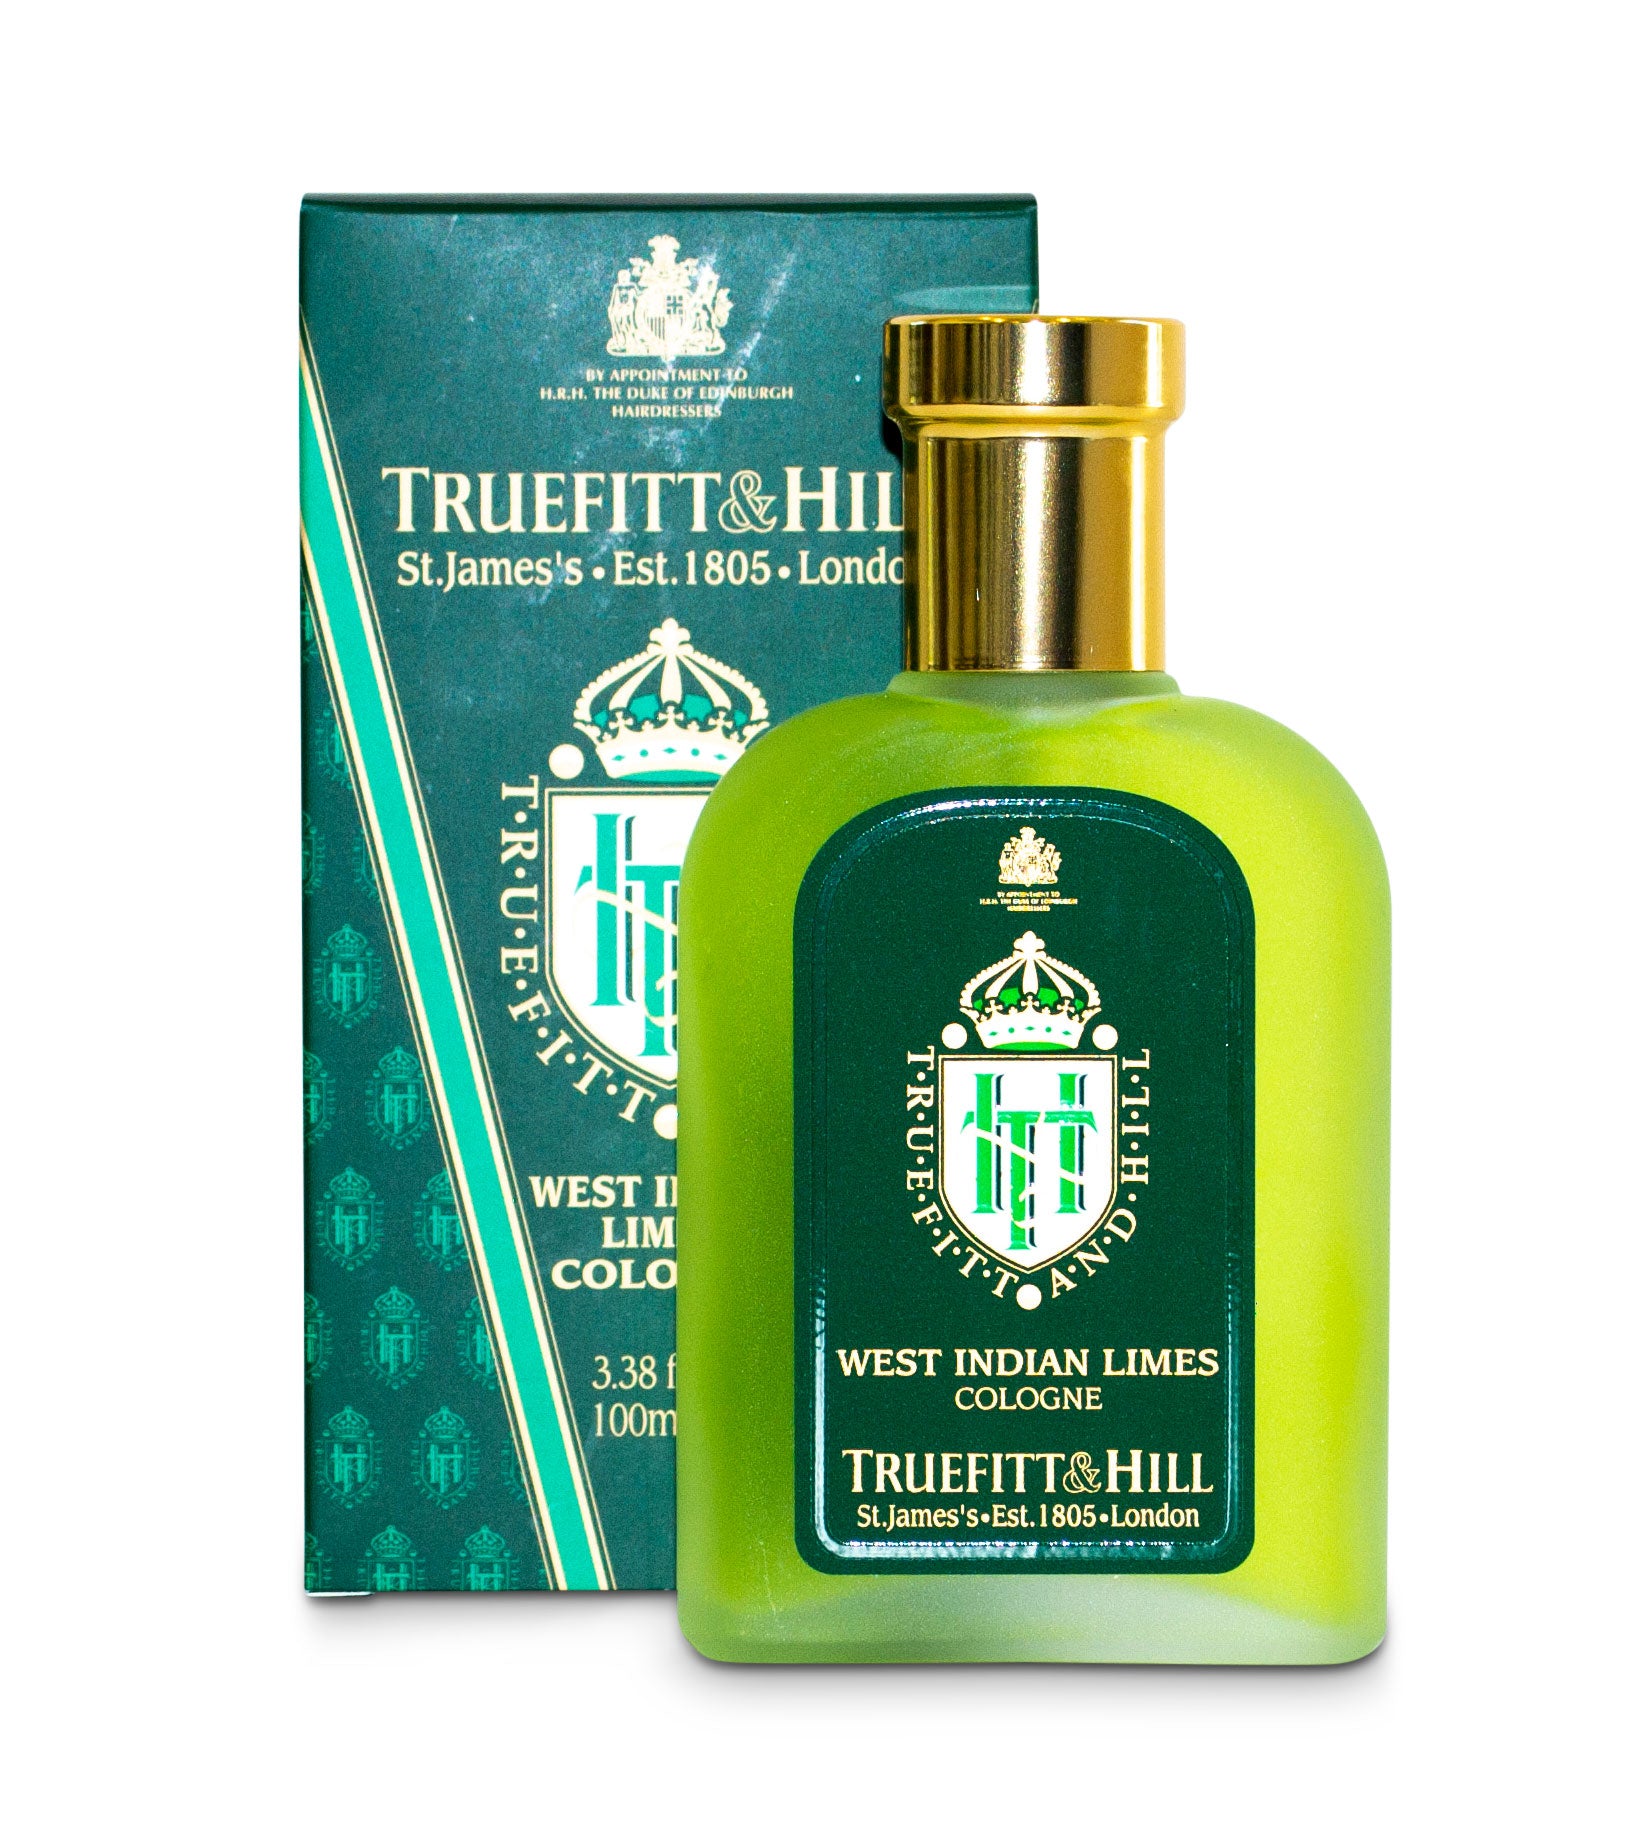 Truefitt & Hill West Indian Limes Cologne